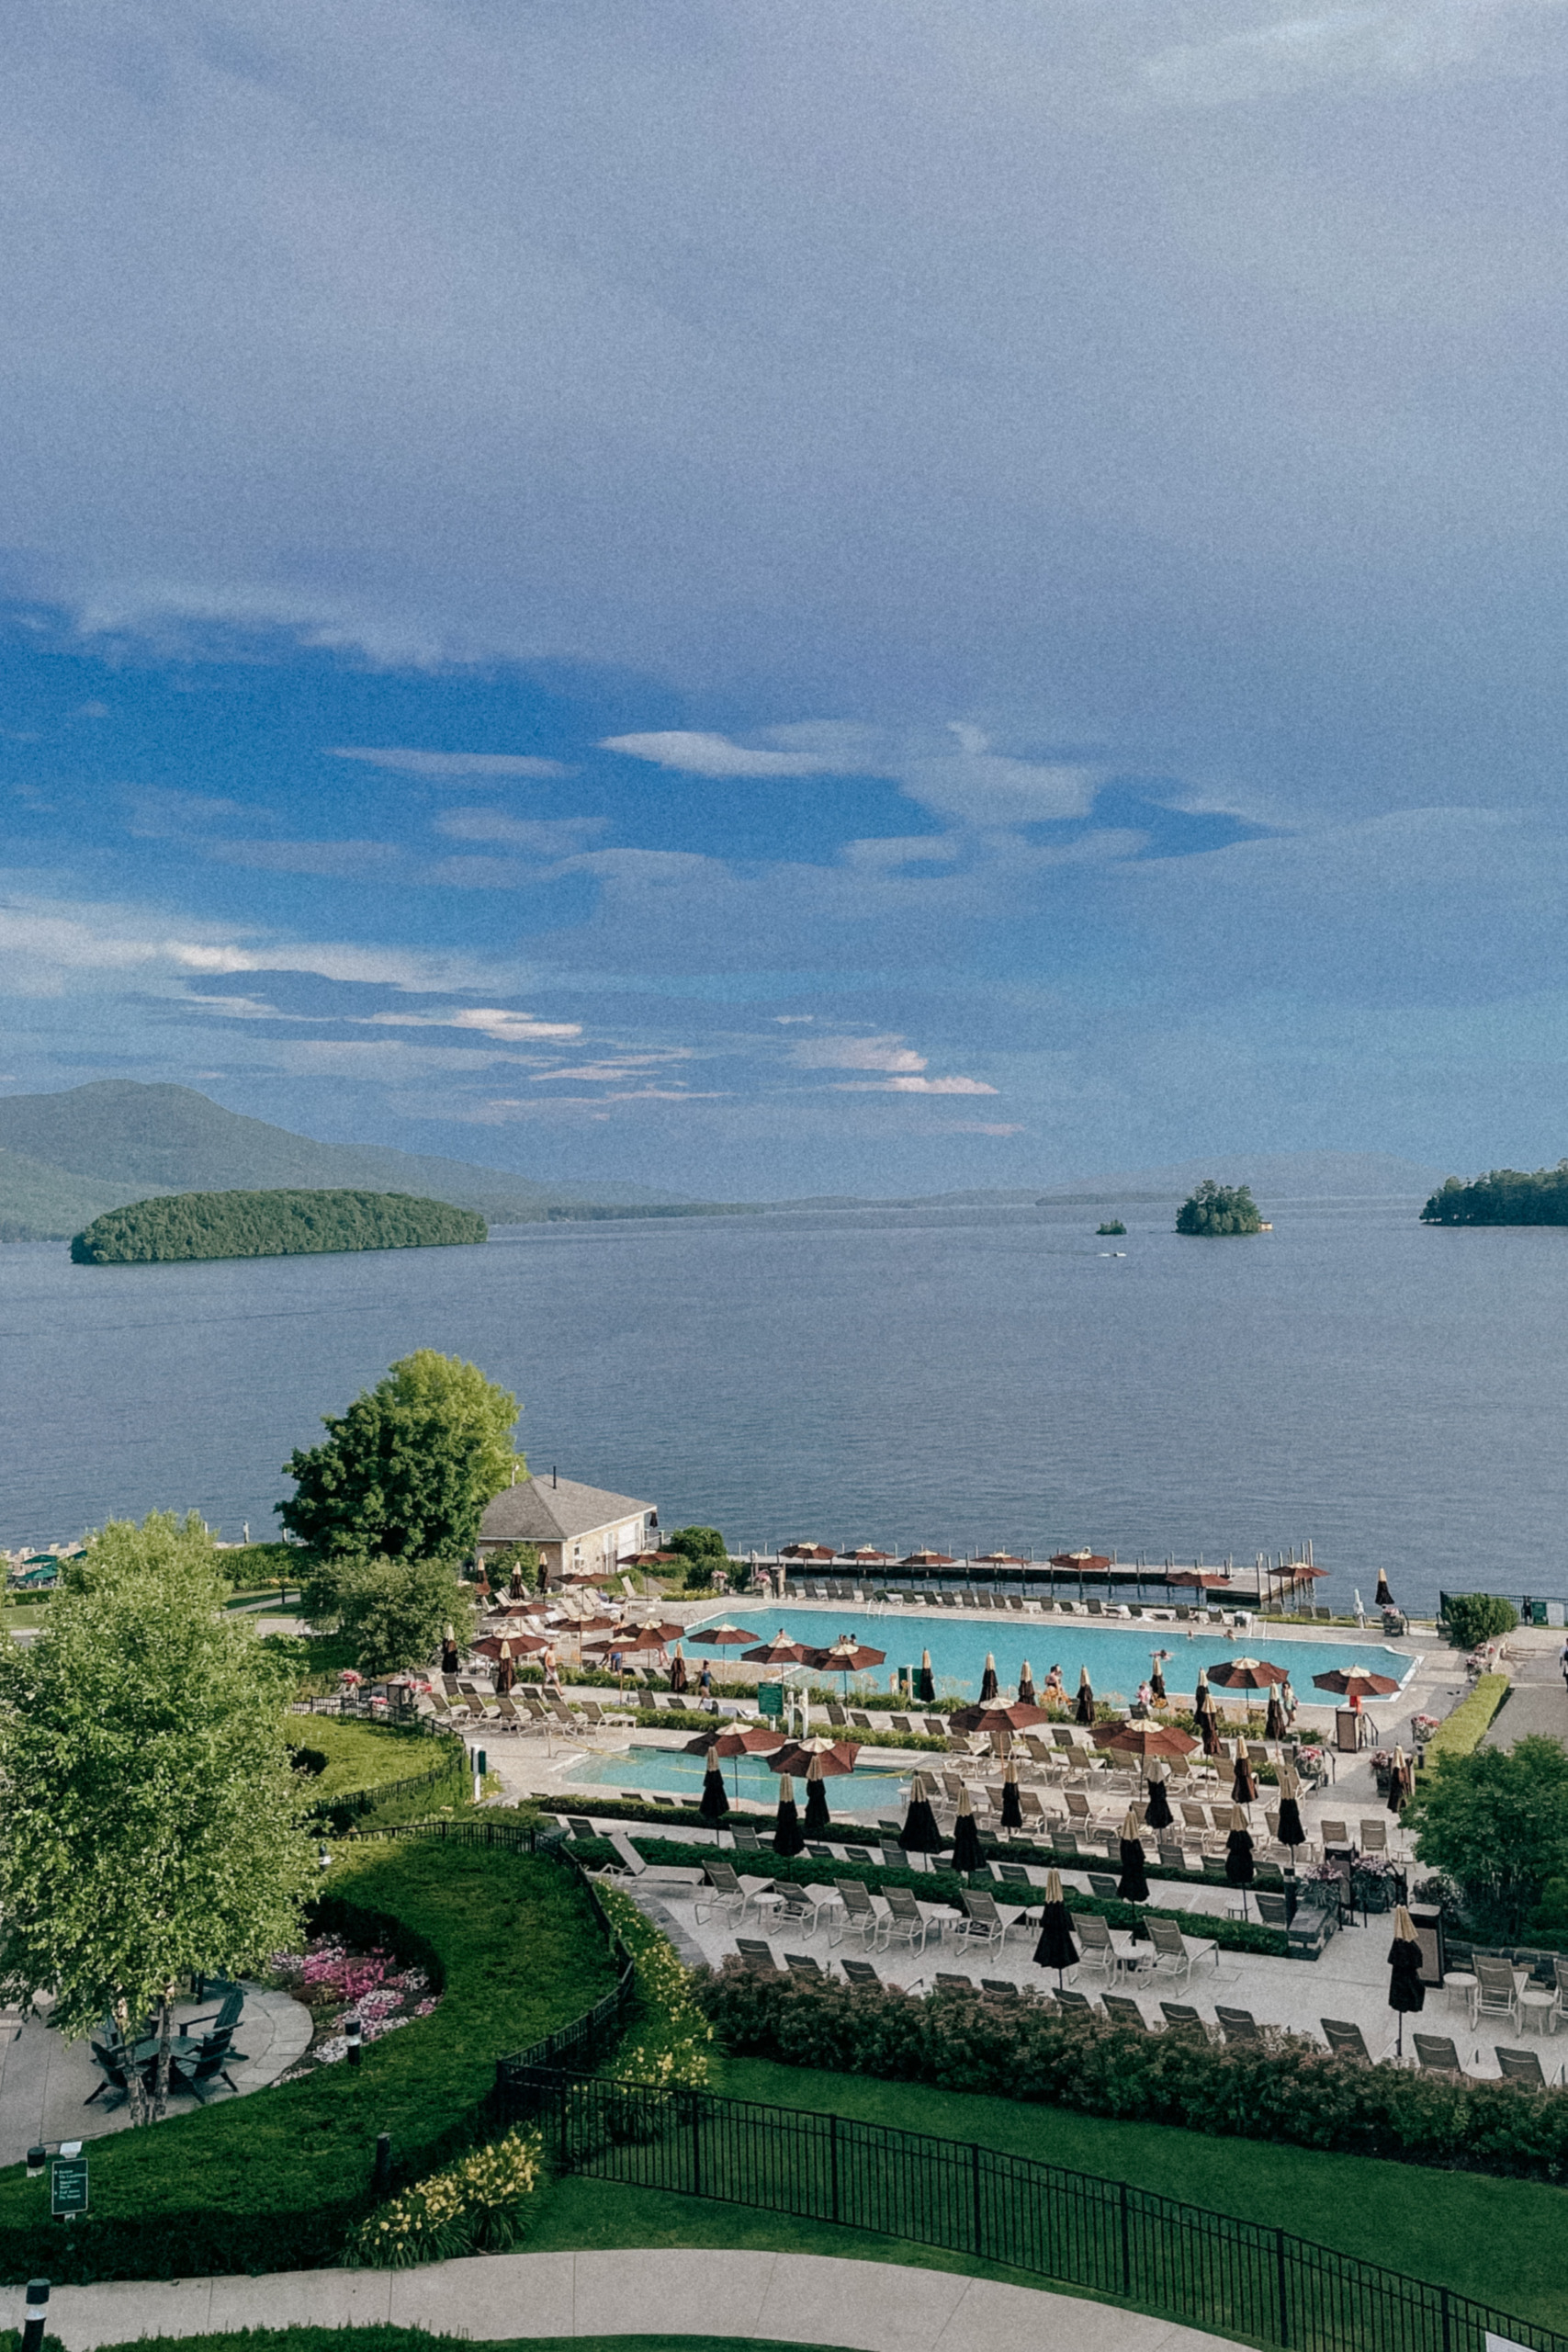 Three Day Getaway to The Sagamore Resort on Lake George New York - Back of Sagamore Resort Grounds Pool and Lake View